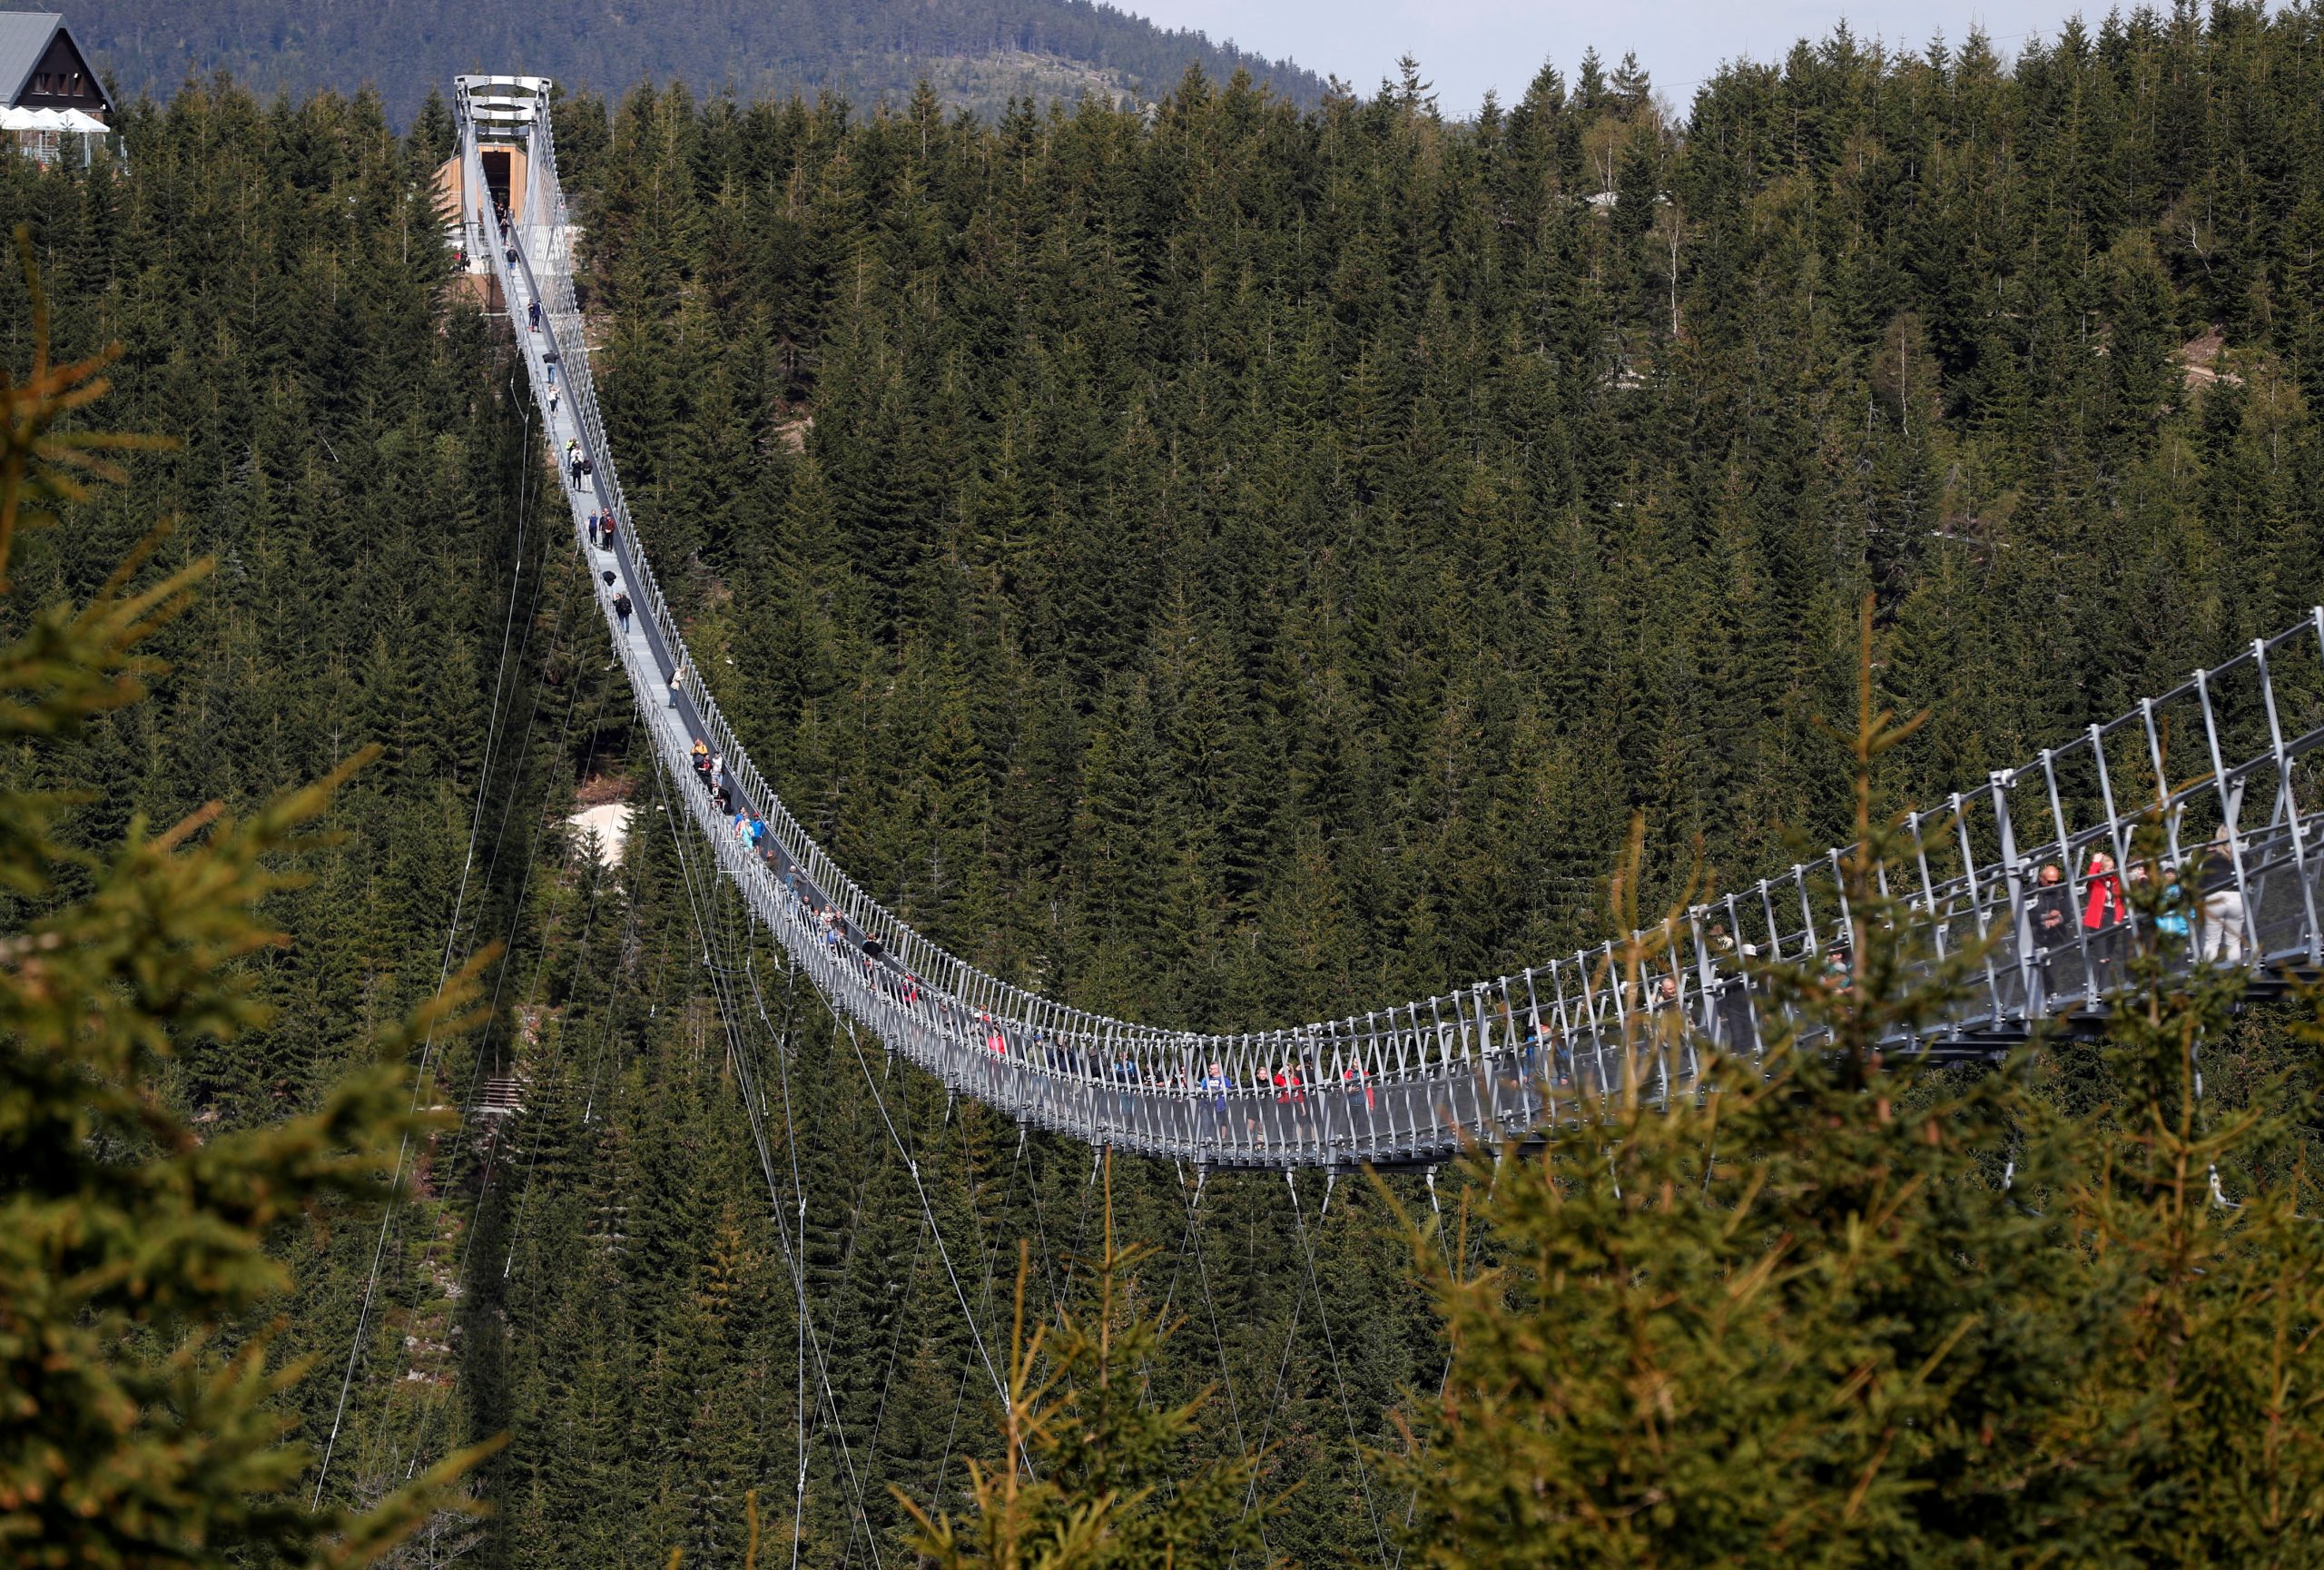 Sky Bridge 721 in the Czech Republic is now the world’s longest suspension footbridge